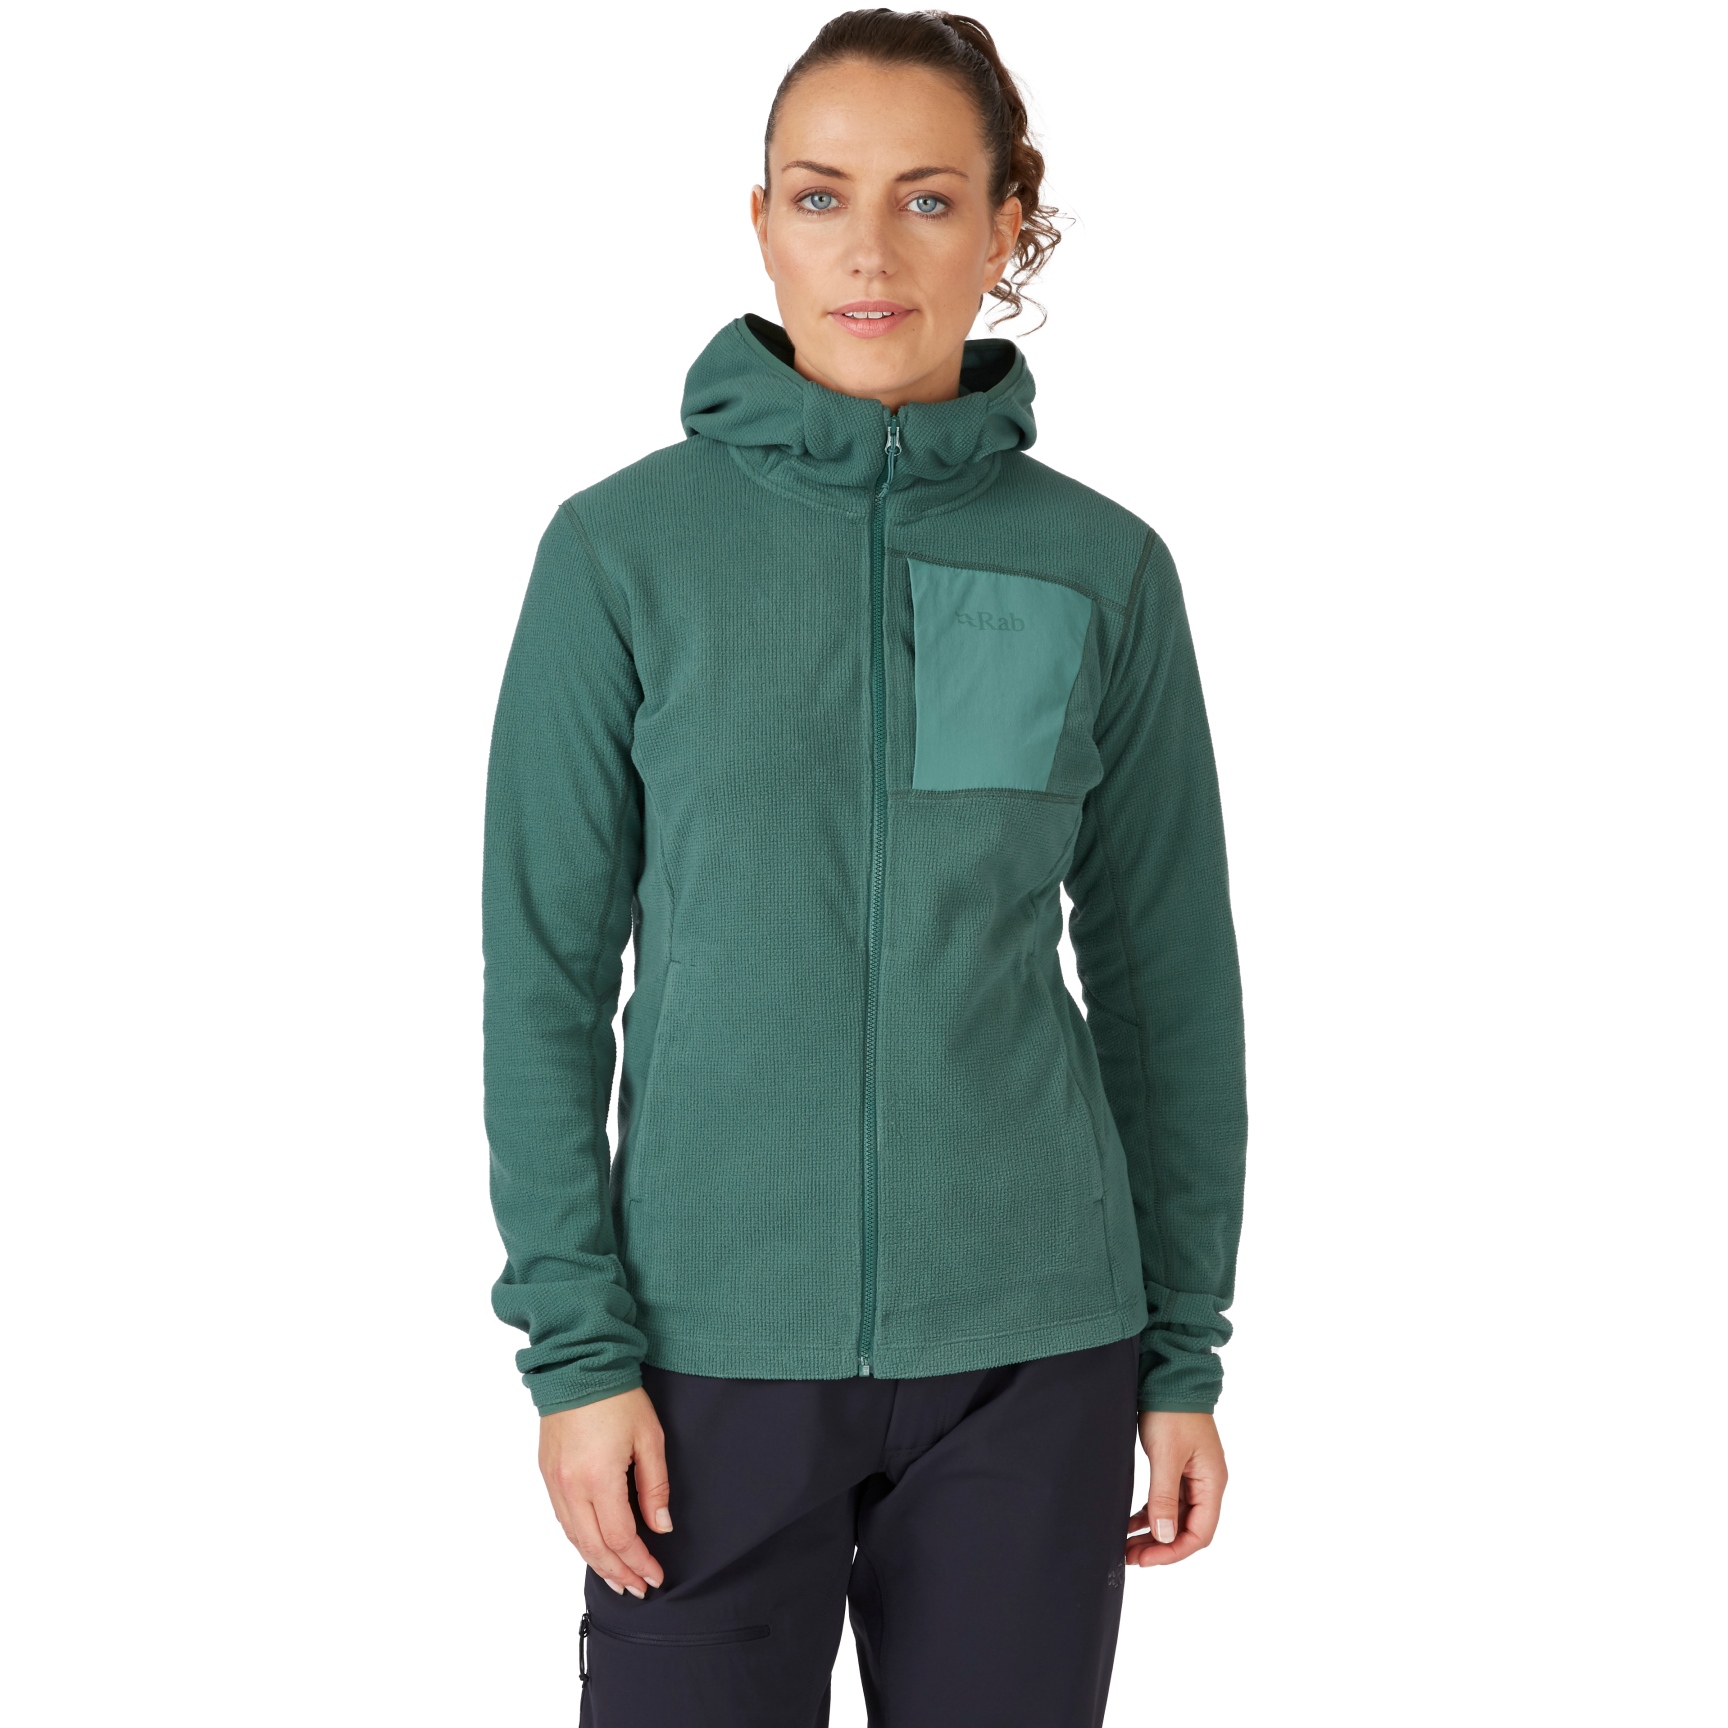 Rab Tecton Hoody Jacket Women - green slate | BIKE24